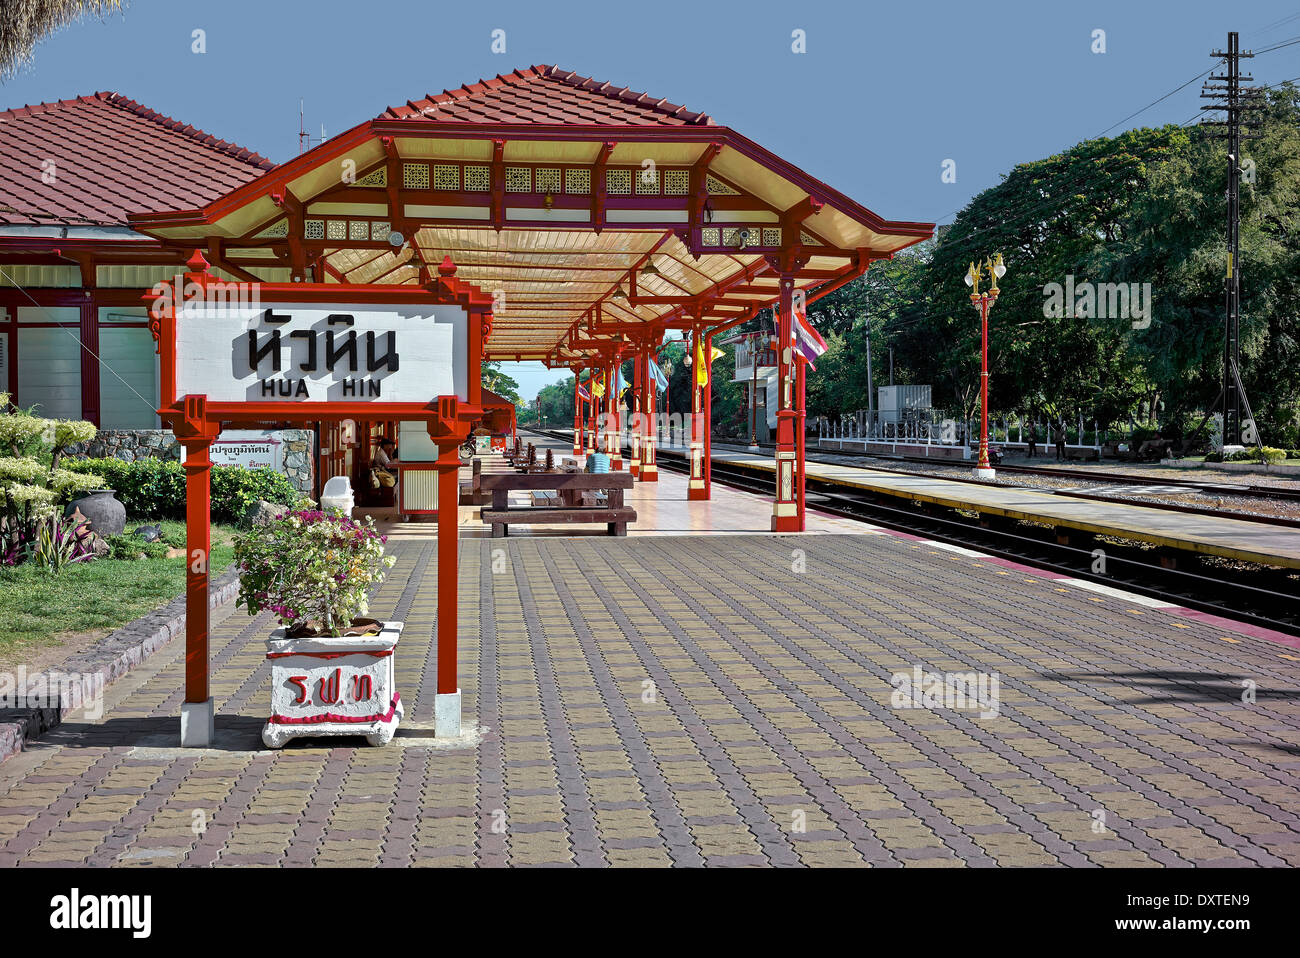 Hua Hin train station and platform. Thailand S. E. Asia Stock Photo